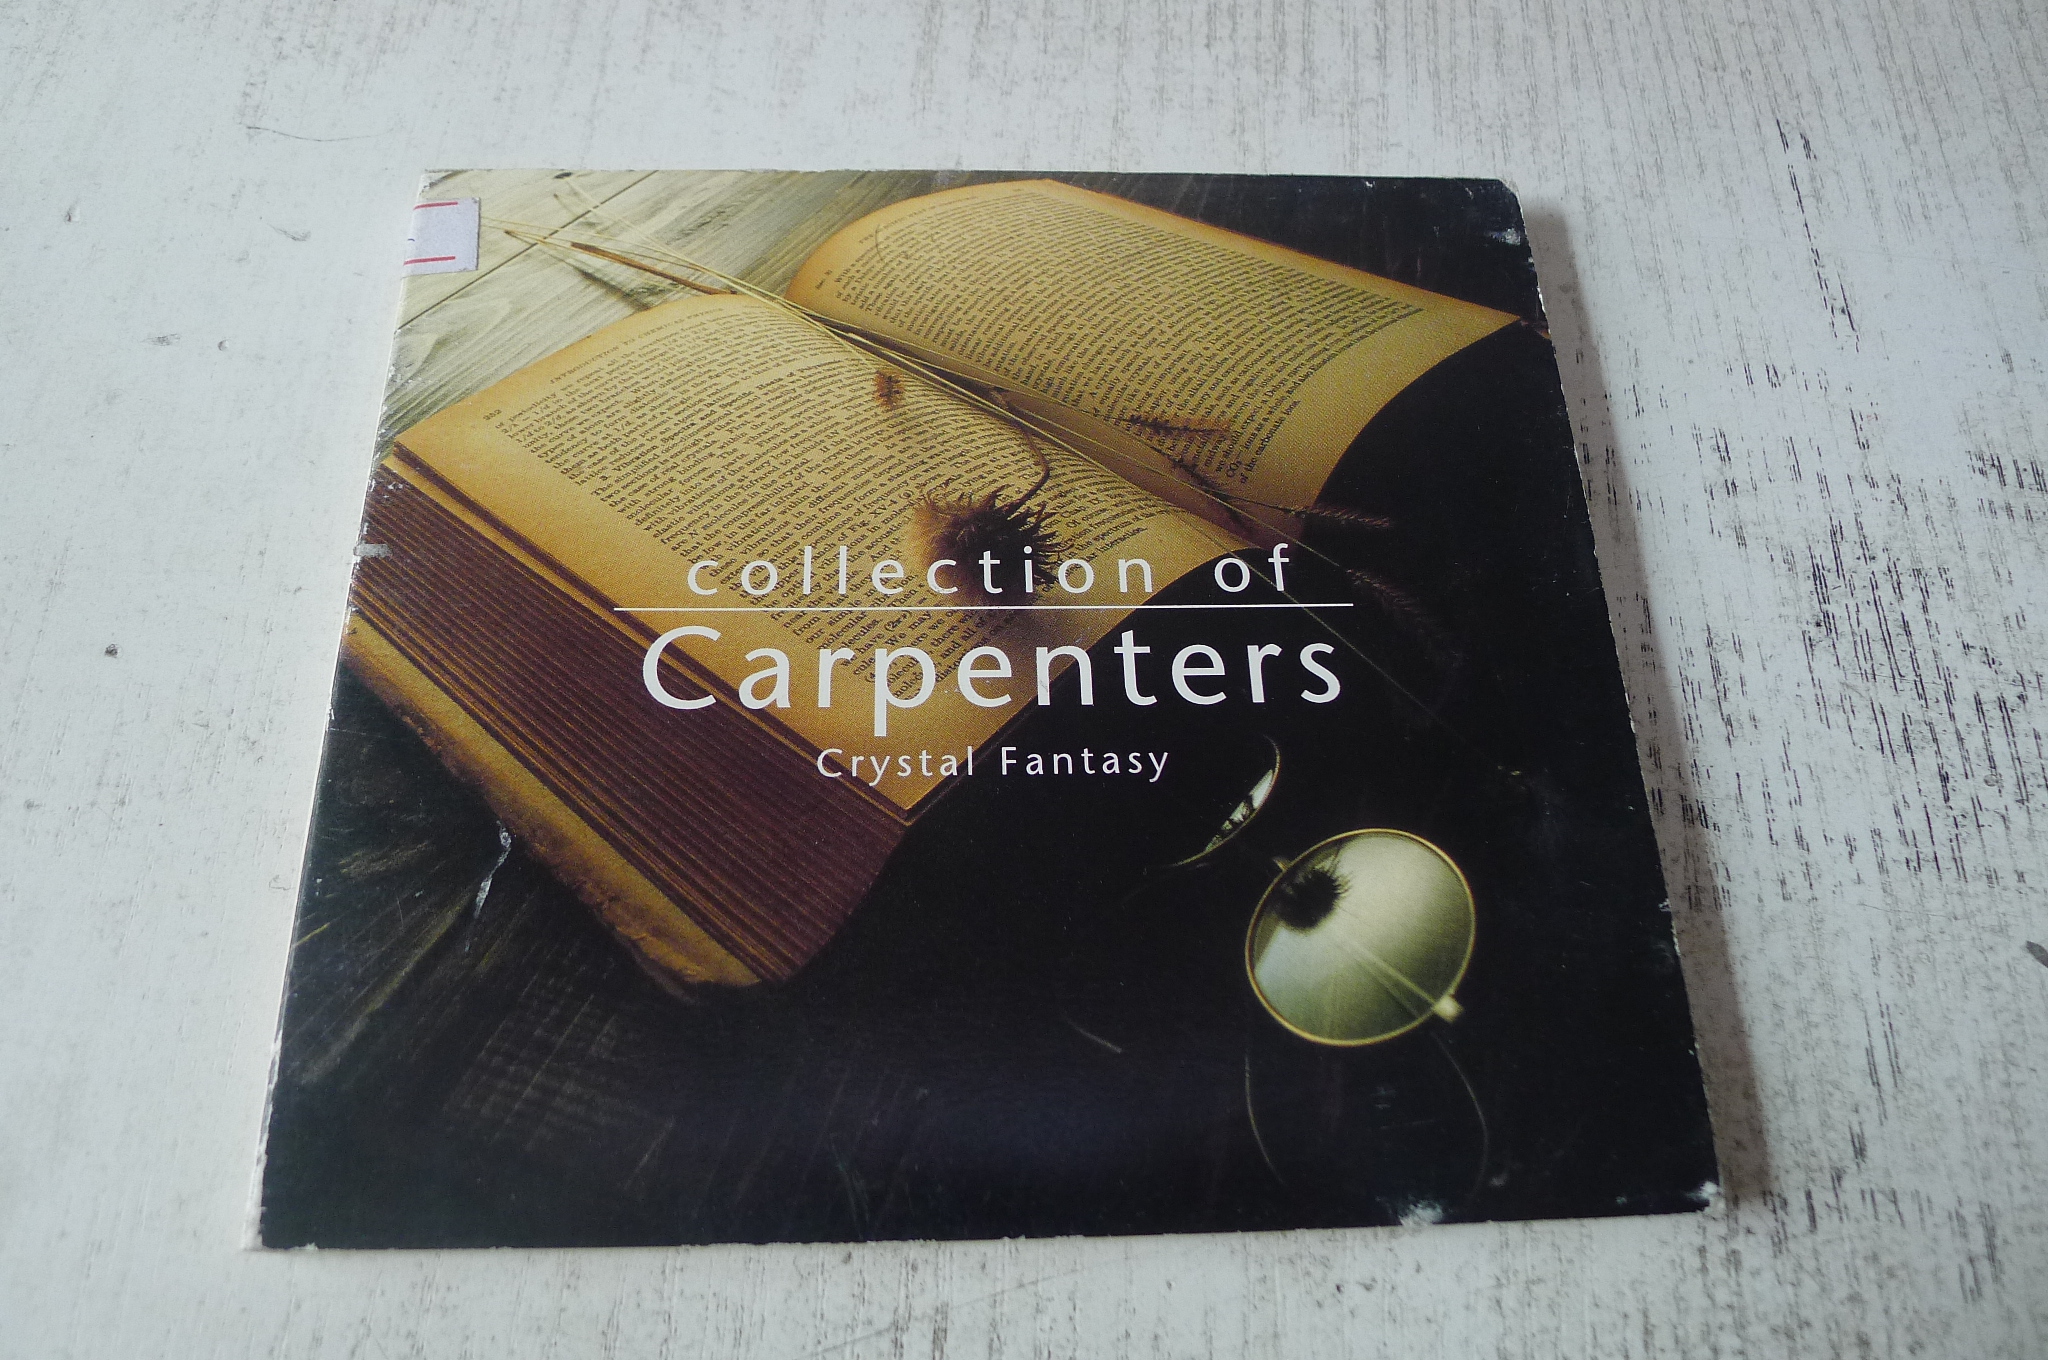 Genuine CD, carpenters crystal fantry